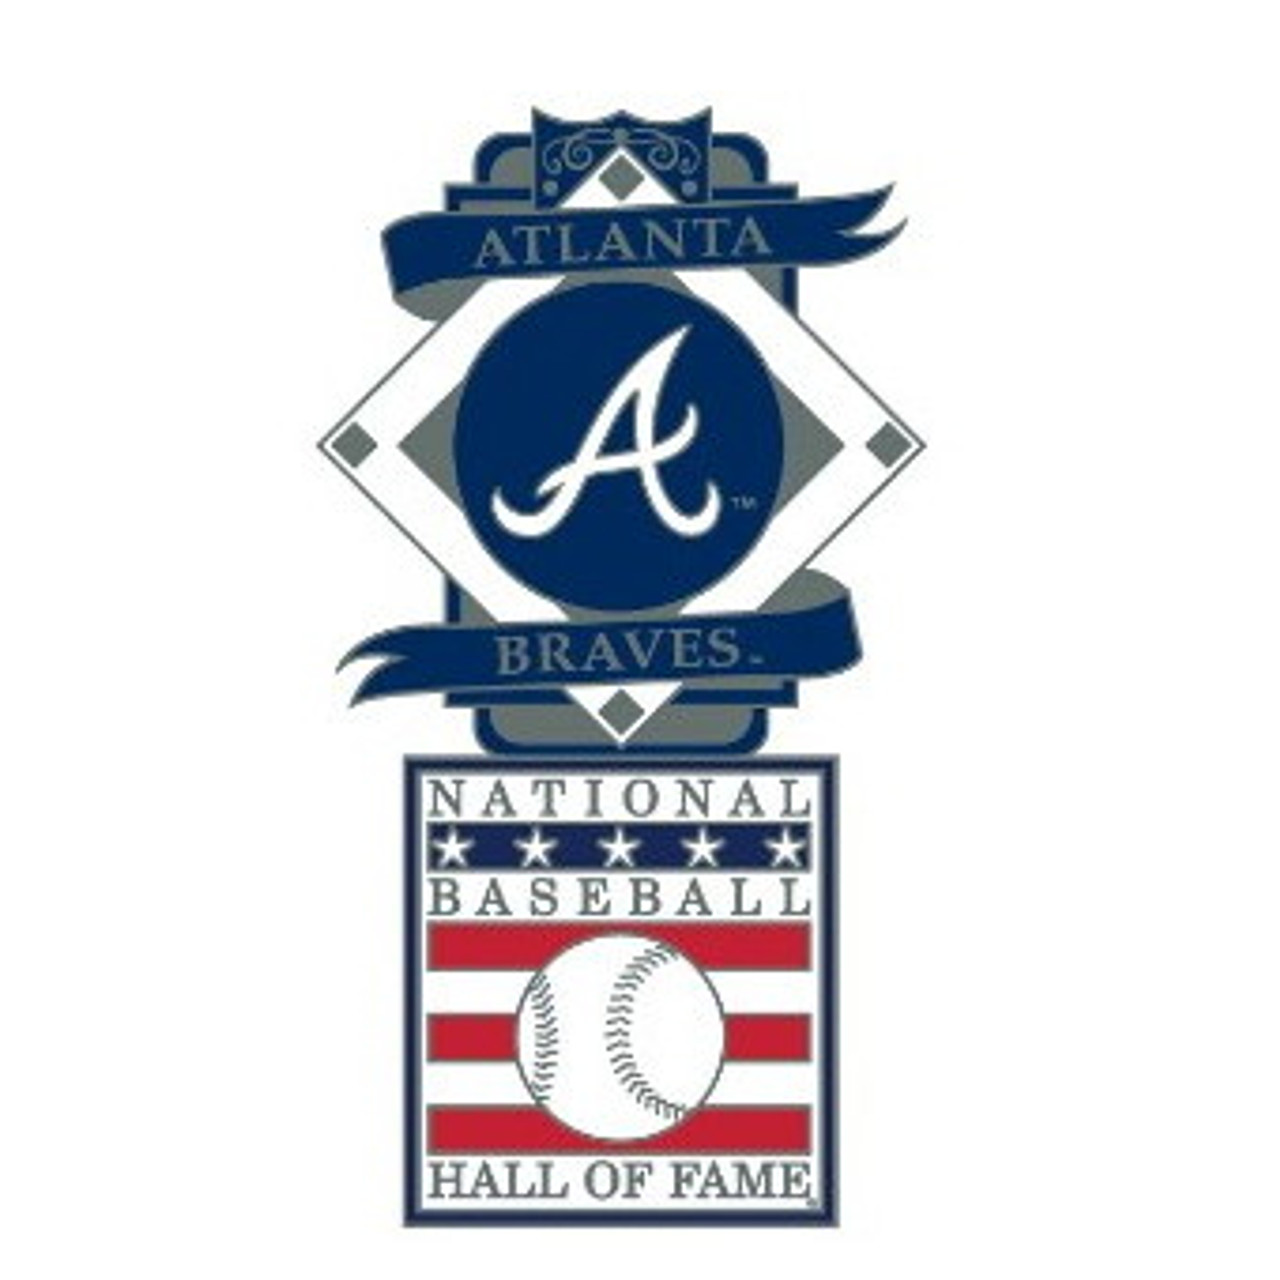 Atlanta Braves Baseball Hall of Fame Logo Exclusive Collector's Pin